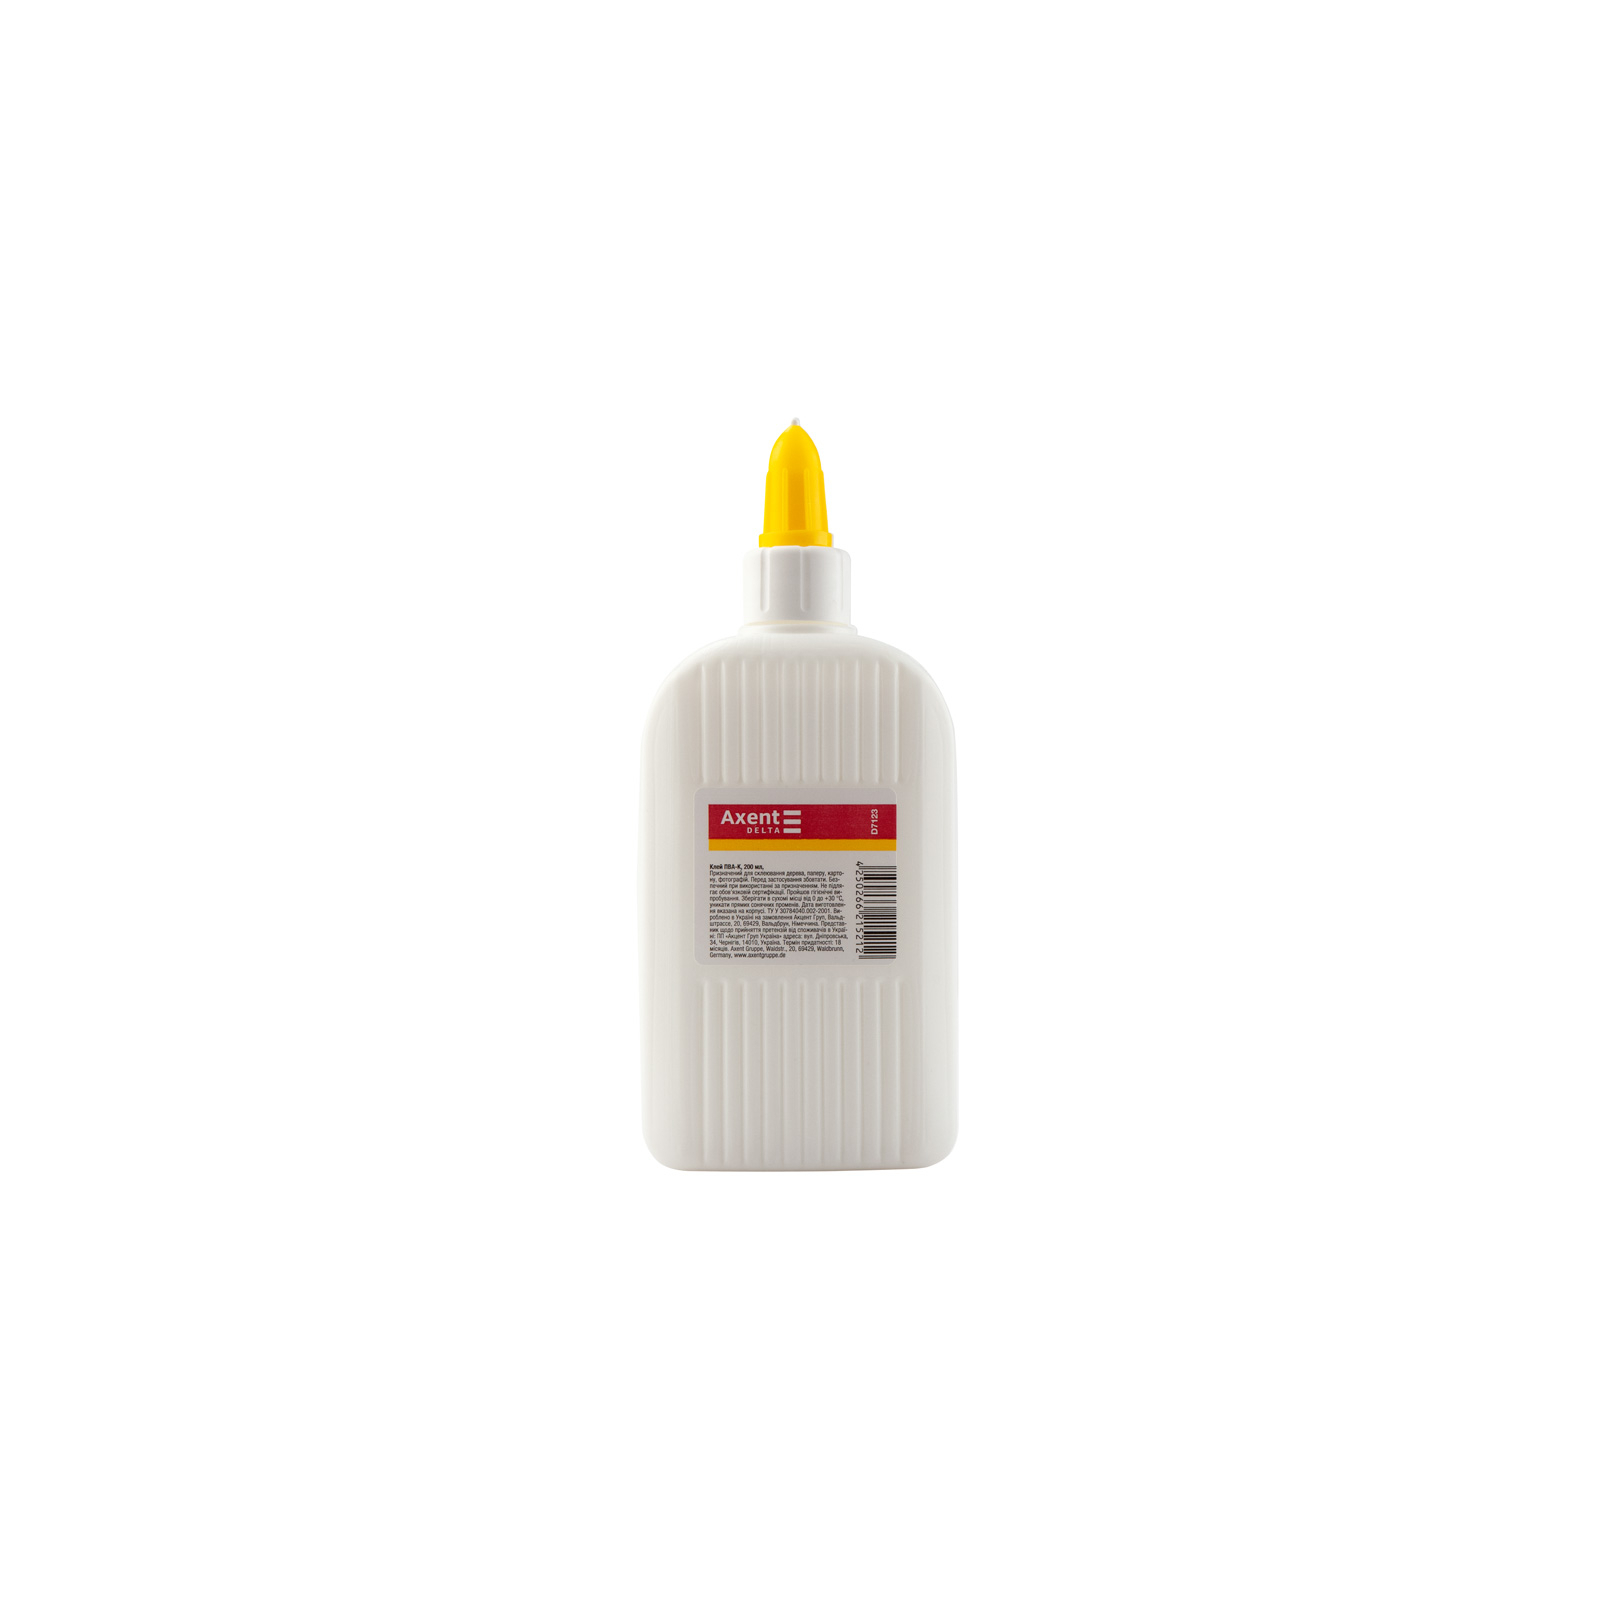 Клей Delta by Axent White glue, PVA, 200 мл, cap dispenser (D7123)